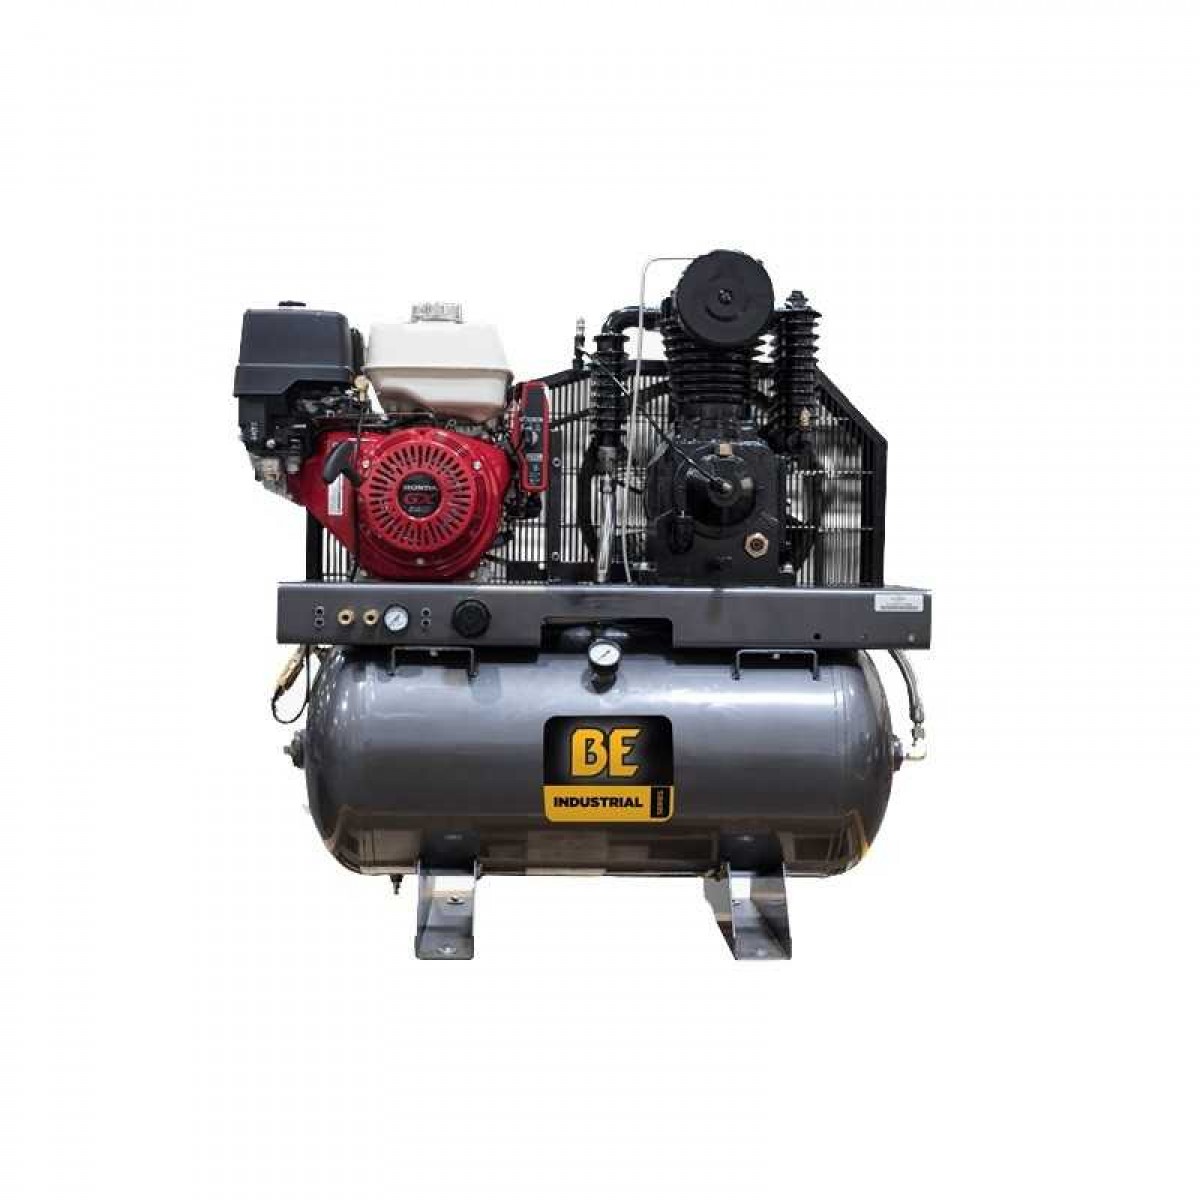 Be Pressure 30 Gal Gas 2 Stage Air Compressor Ac1330heb2